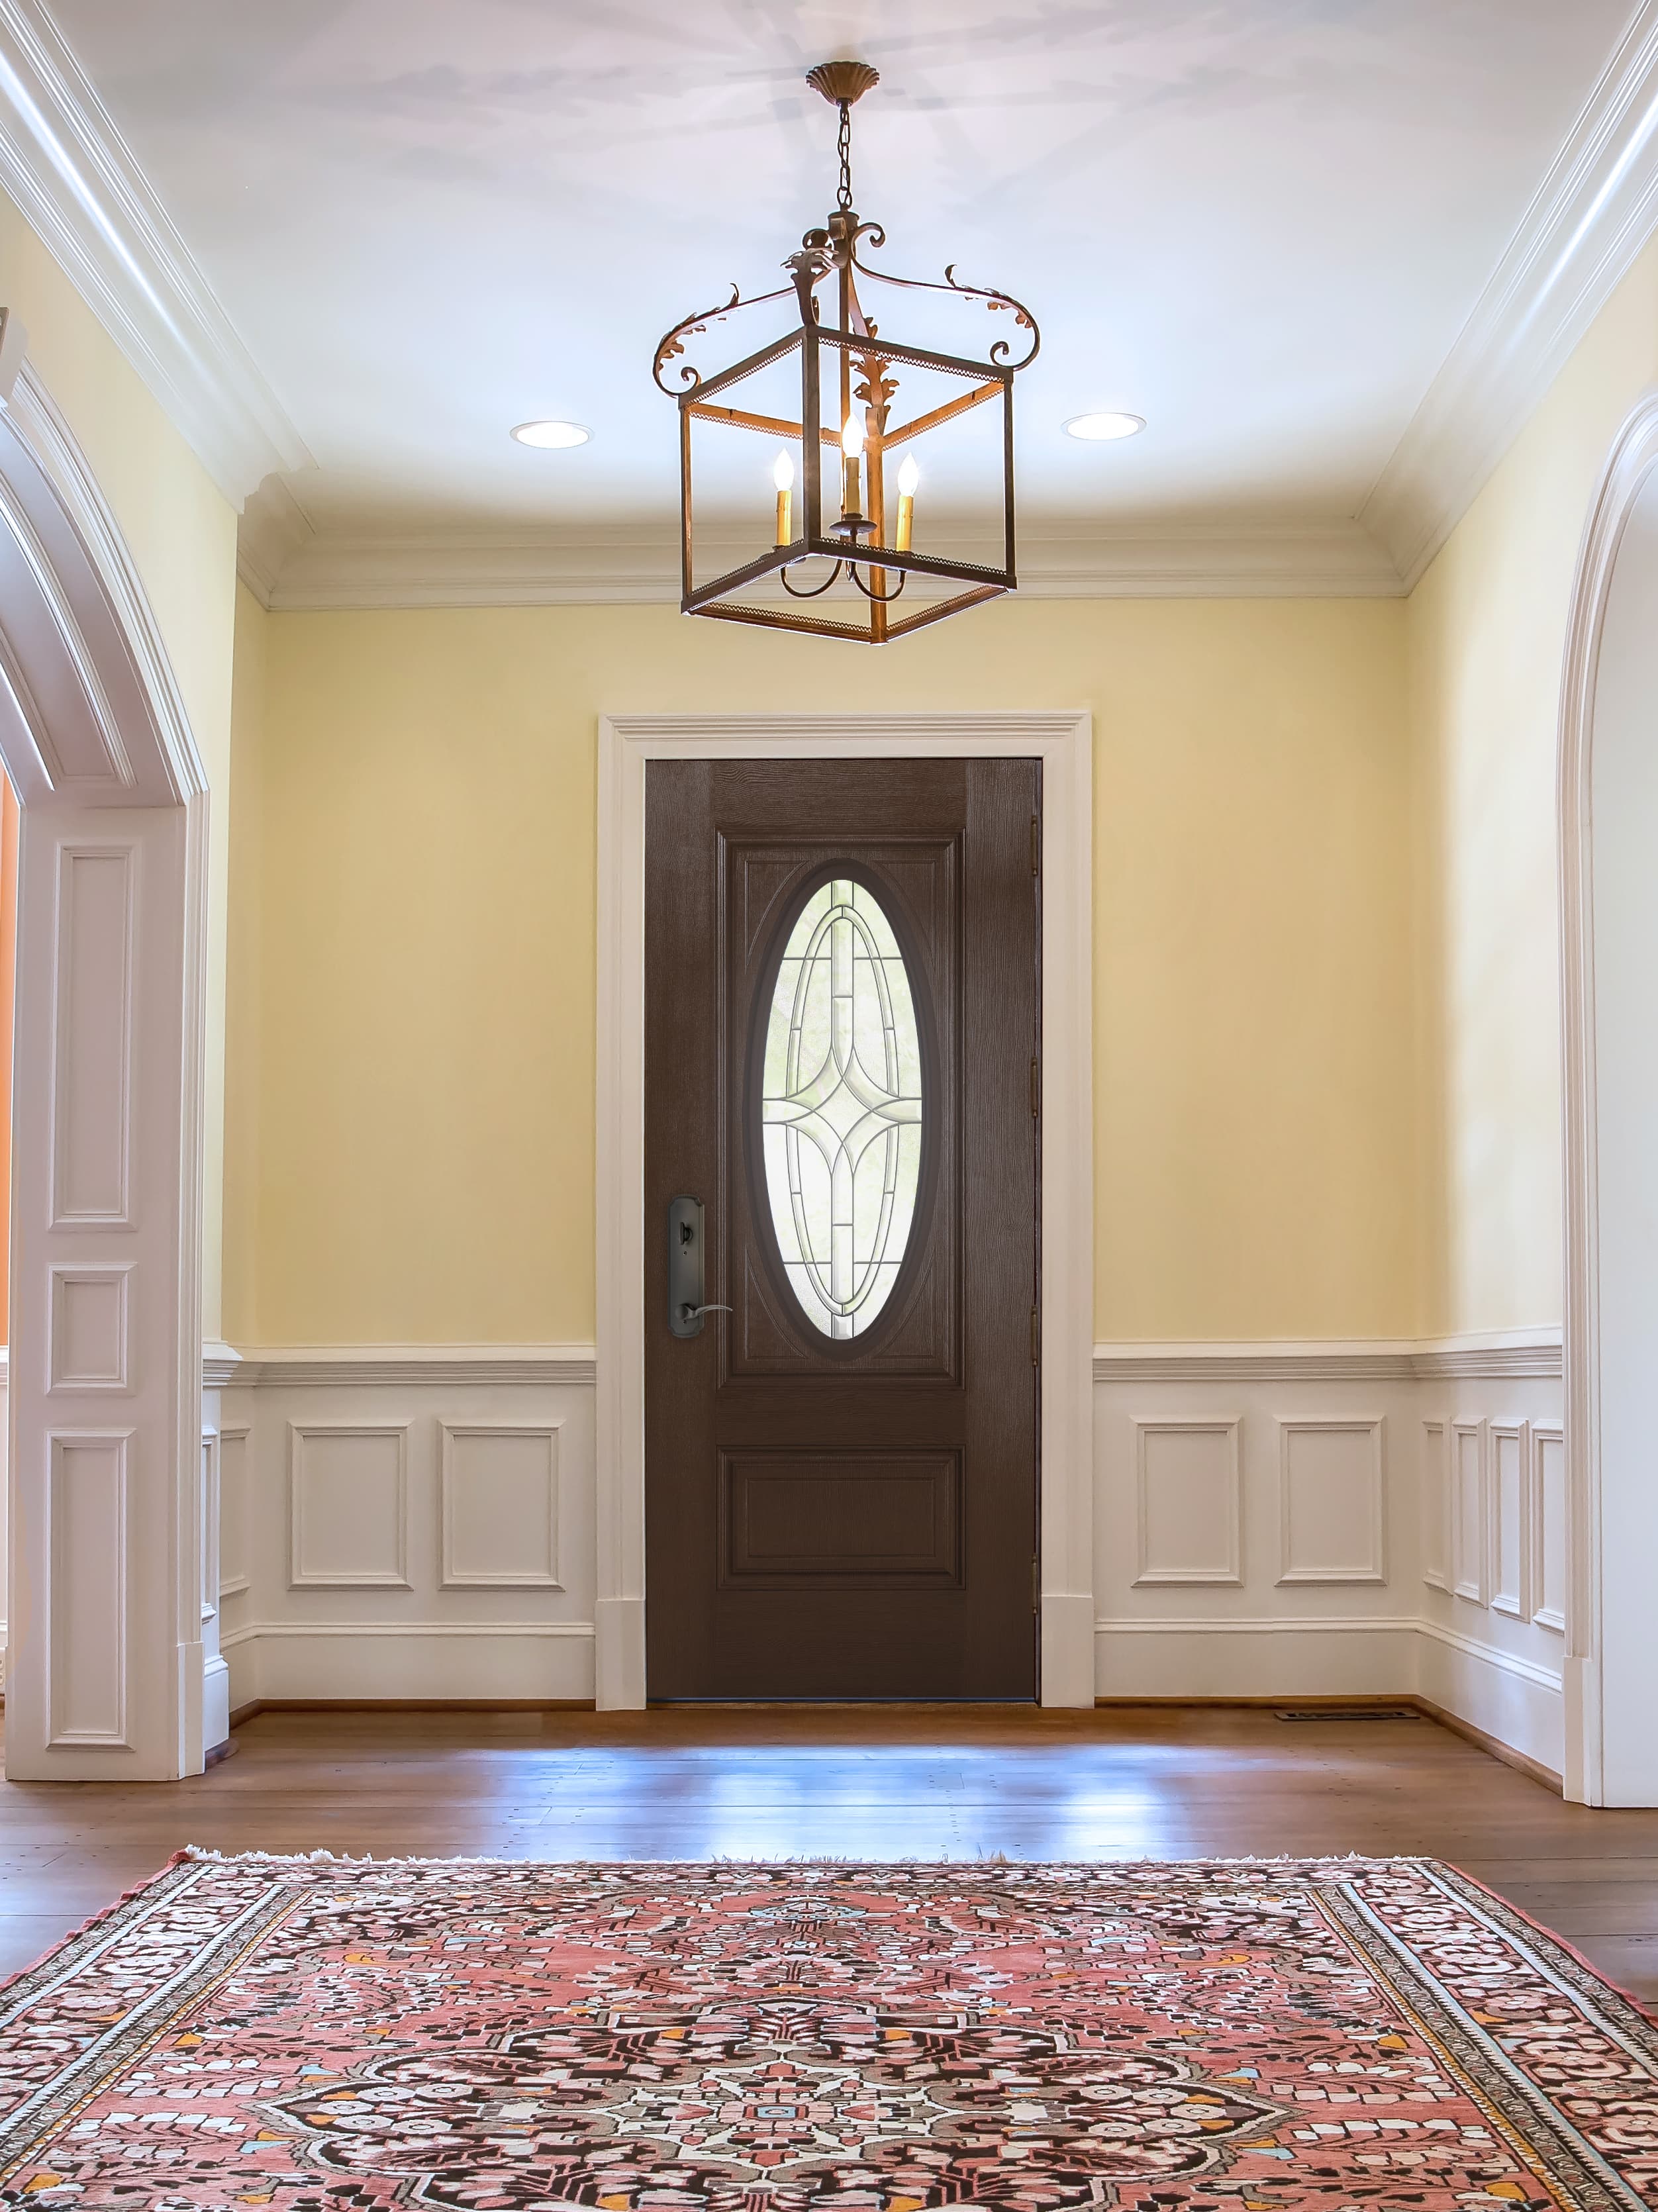 Brown front door with ornate glass in elegant entryway